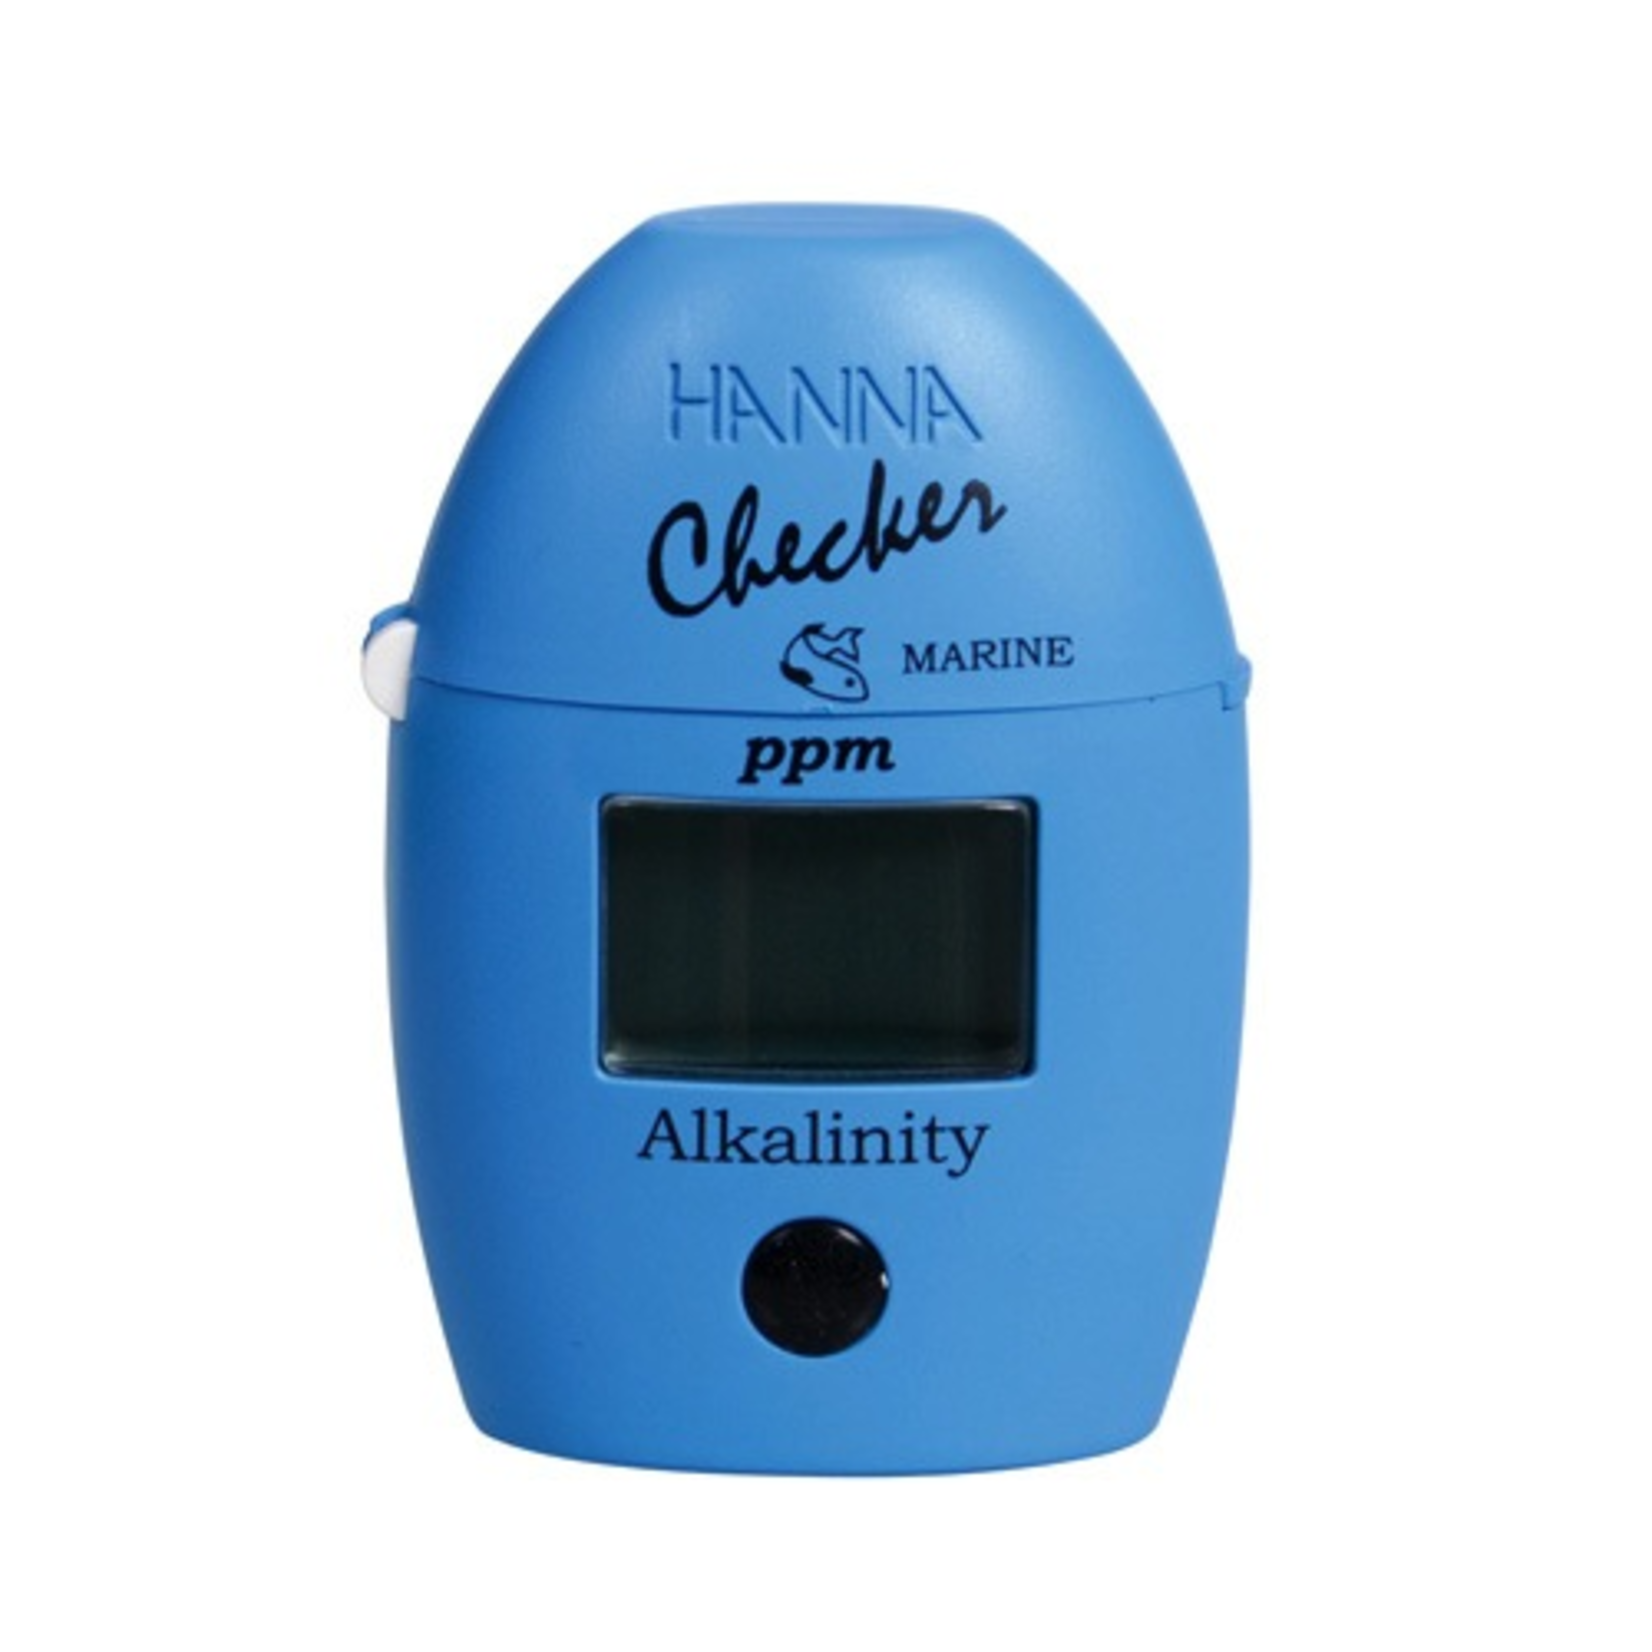 HANNA (W) HI 755 Checker HC Colorimeter - Marine Alkalinity - 0 to 300 ppm